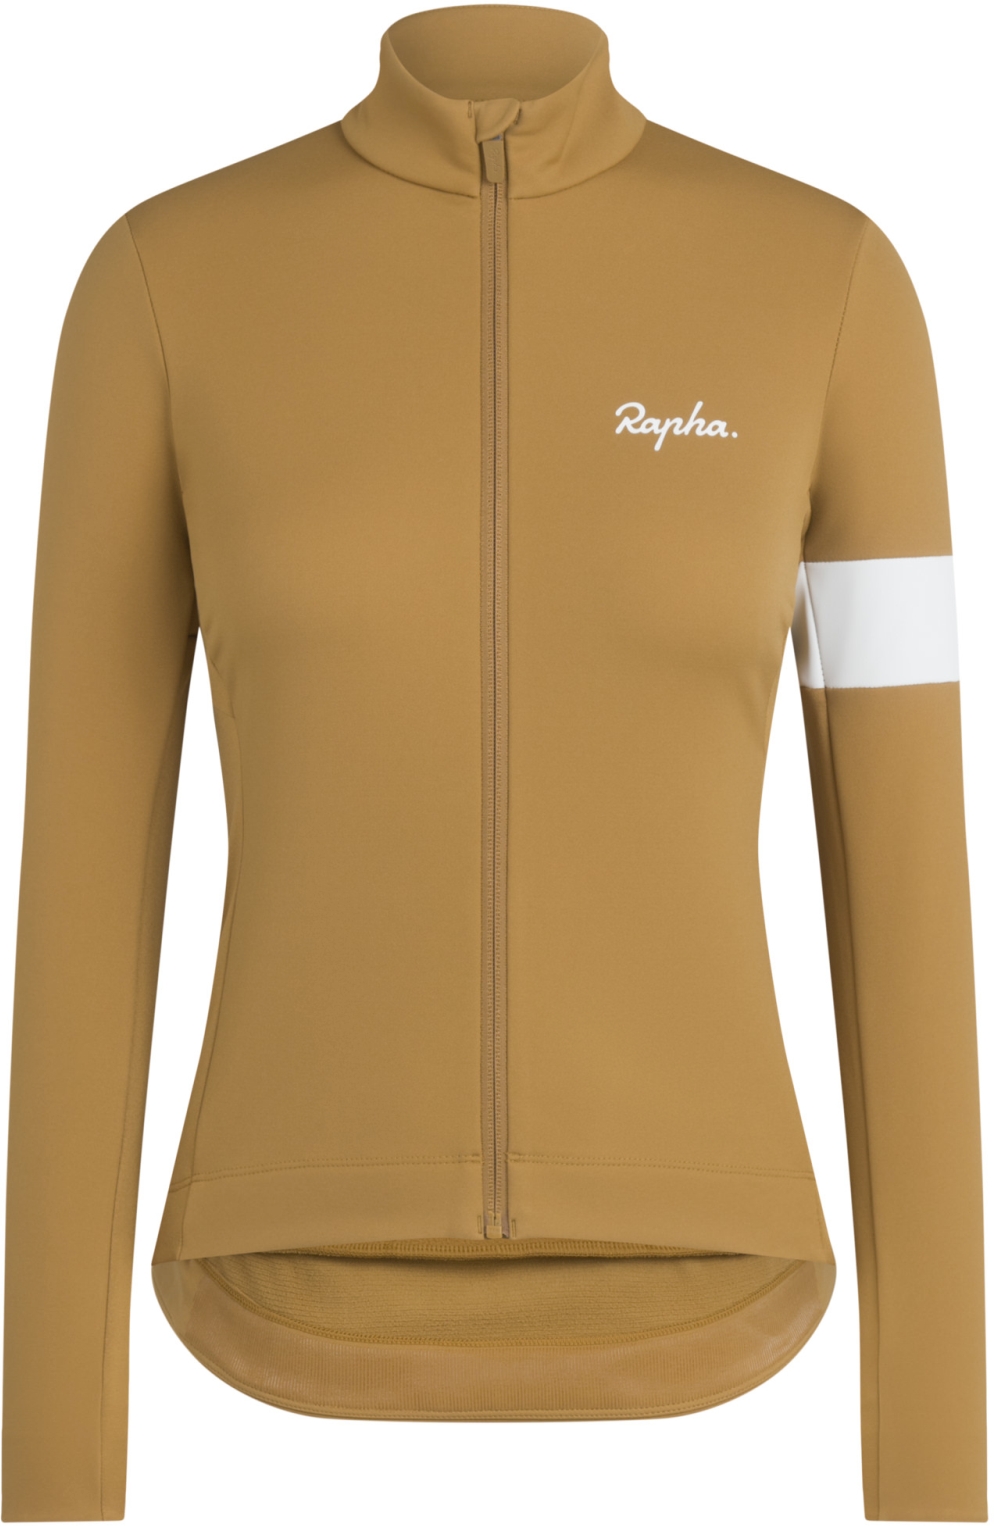 E-shop Rapha Women's Core Winter Jacket - Faded Gold / White S